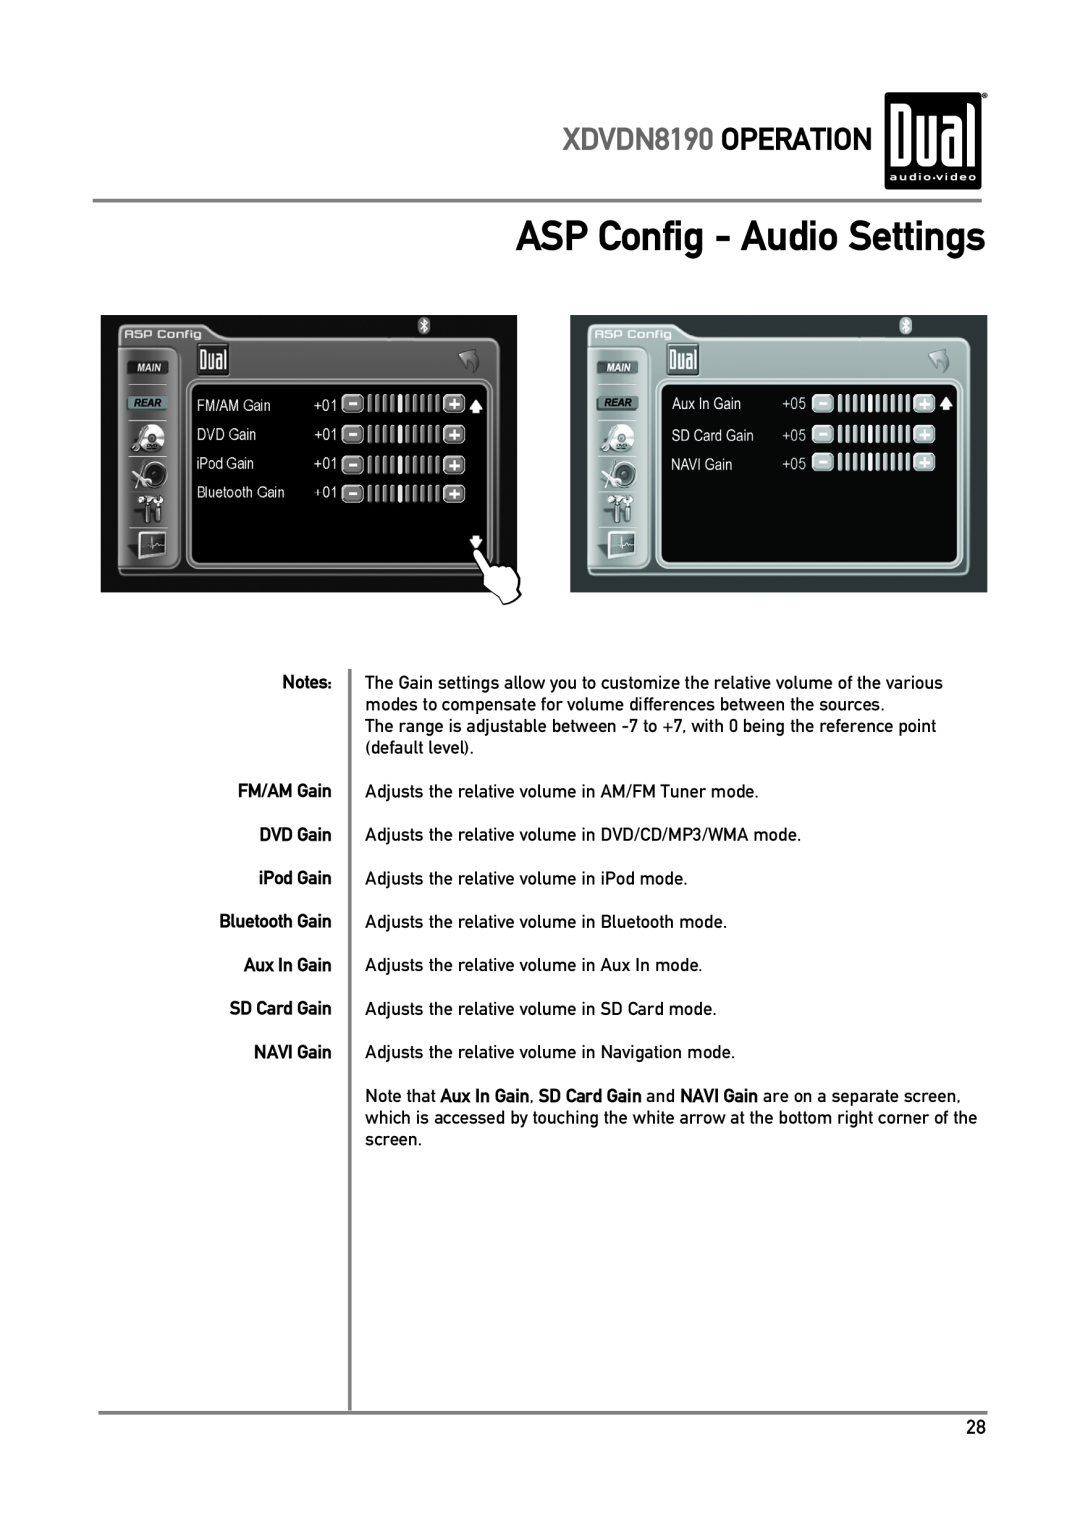 Dual owner manual ASP Config - Audio Settings, XDVDN8190 OPERATION, Notes FM/AM Gain DVD Gain iPod Gain 